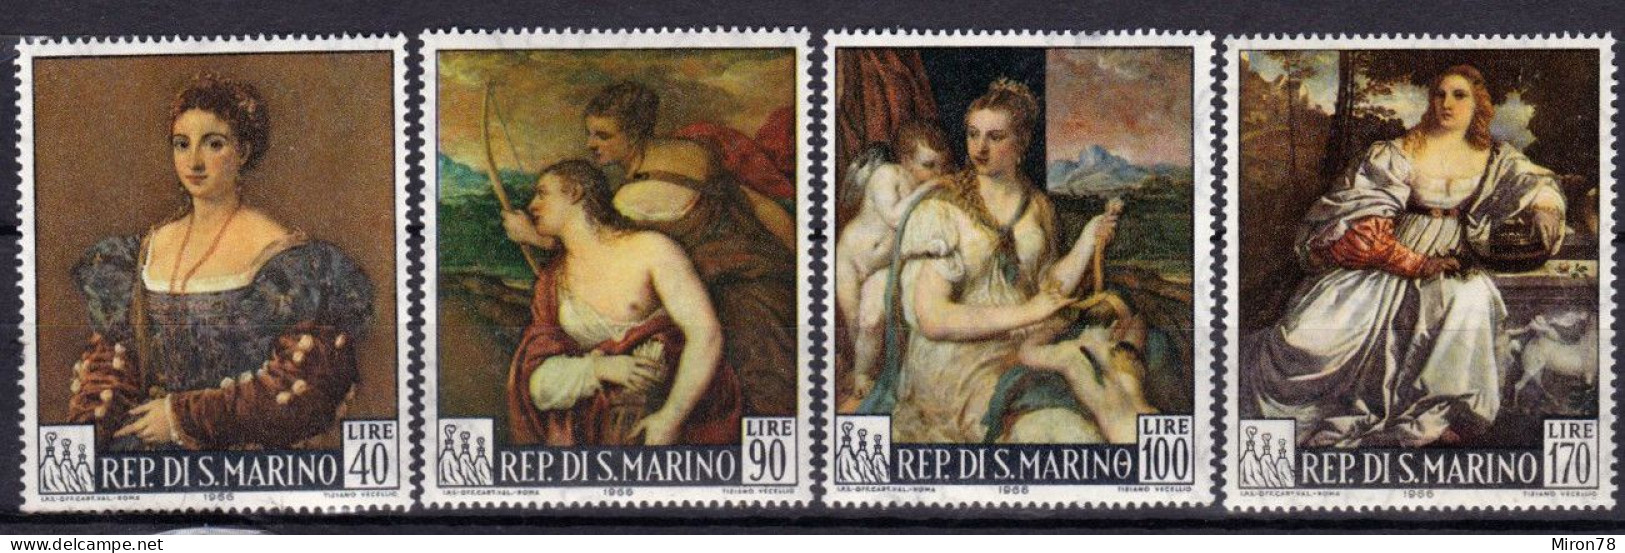 Stamps SAN MARINO MNH Lot15 - Unused Stamps